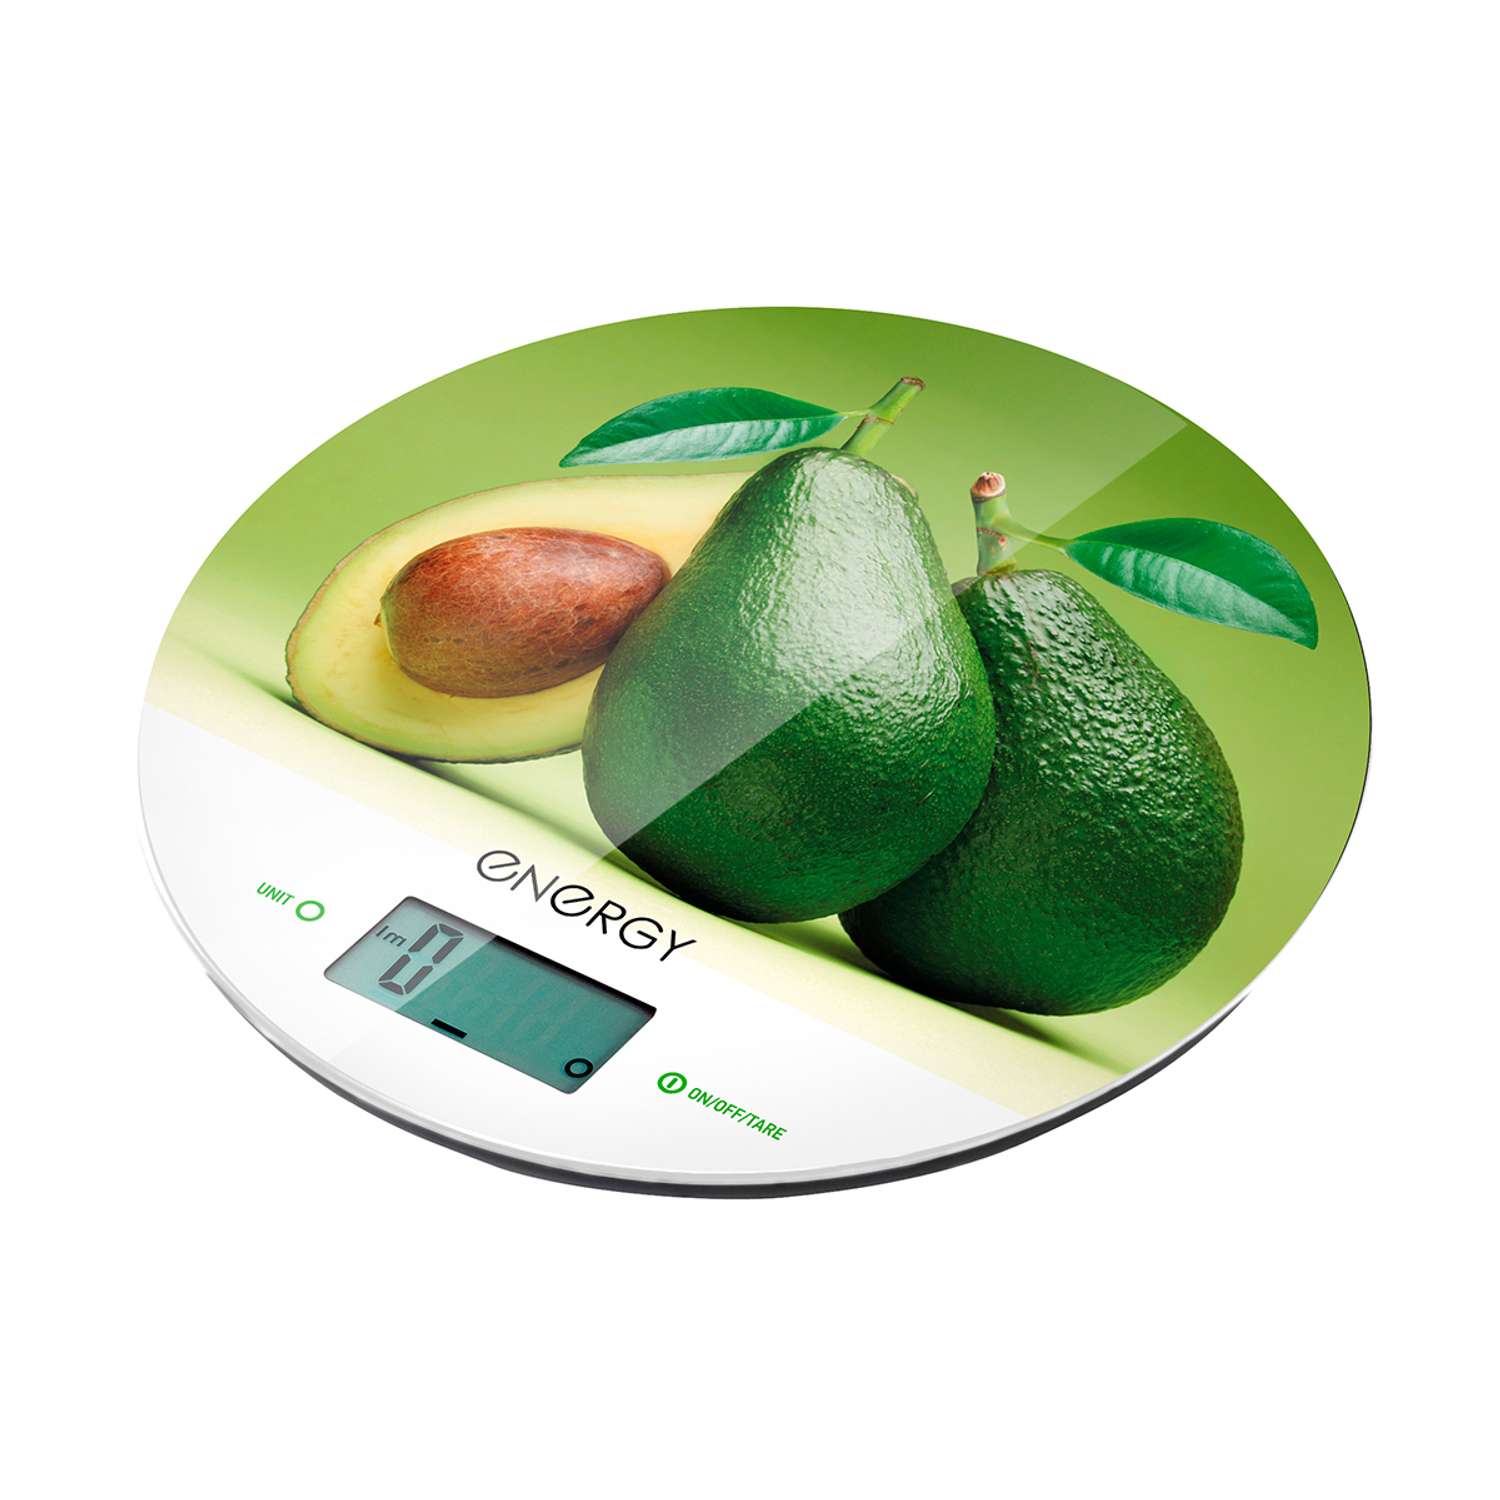 Весы кухонные электронные Energy EN-403 до 5 кг авокадо - фото 1